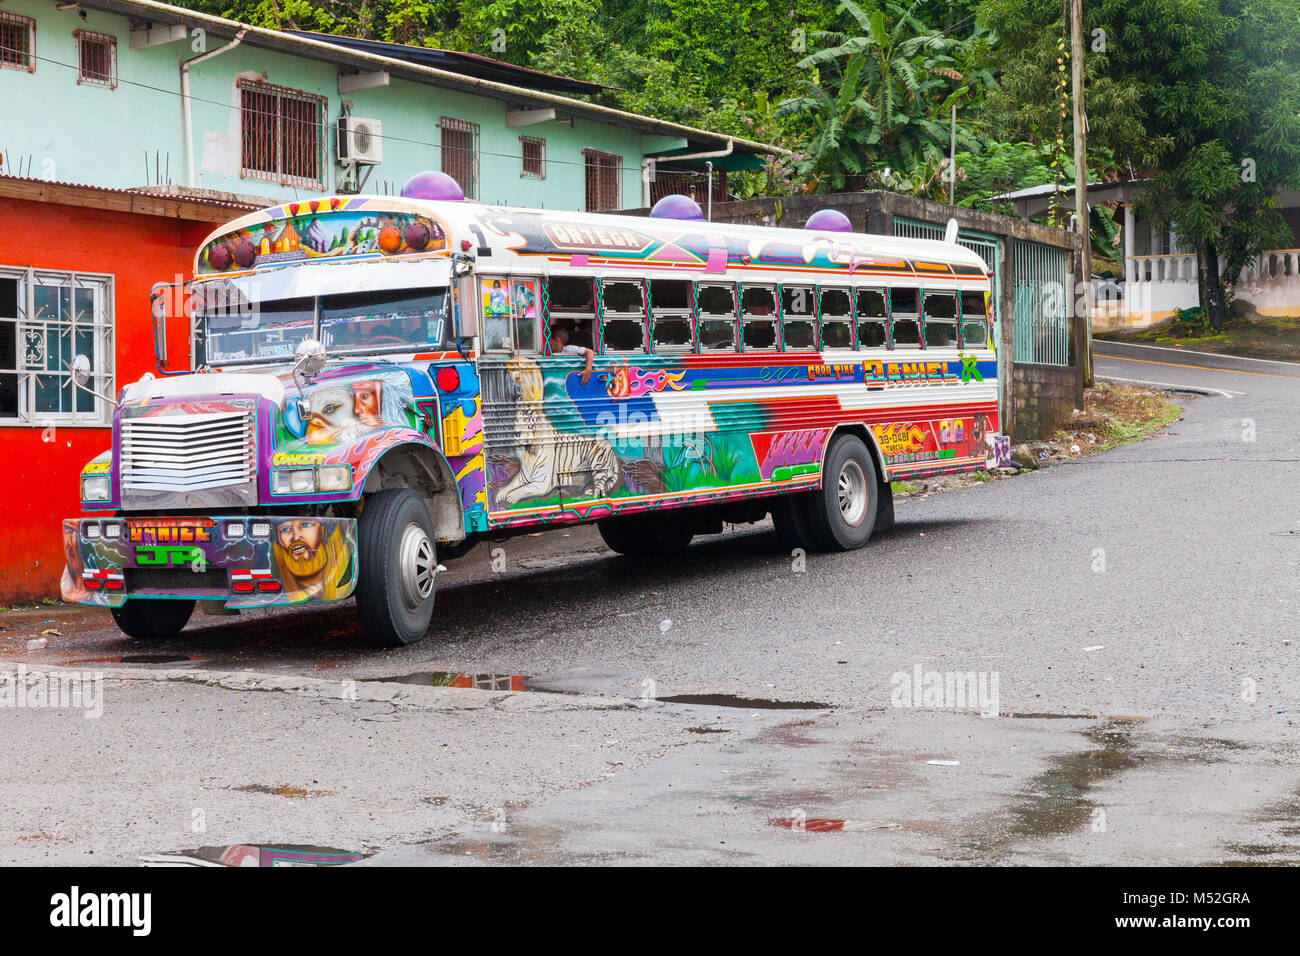 old bus panama called diablo in panama Stock Photo